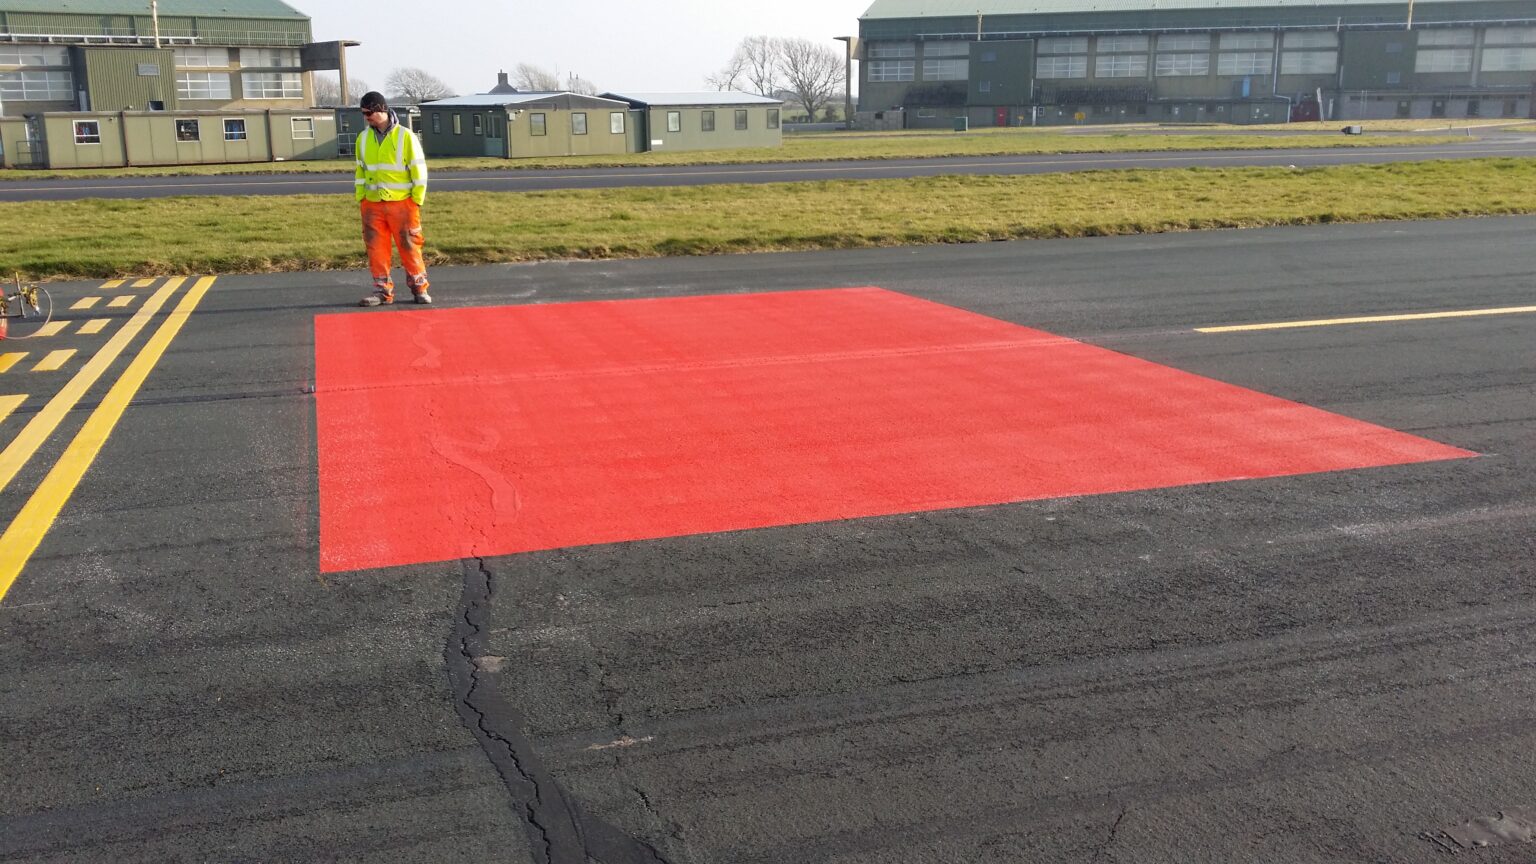 Airfield Airport Runway Repairs